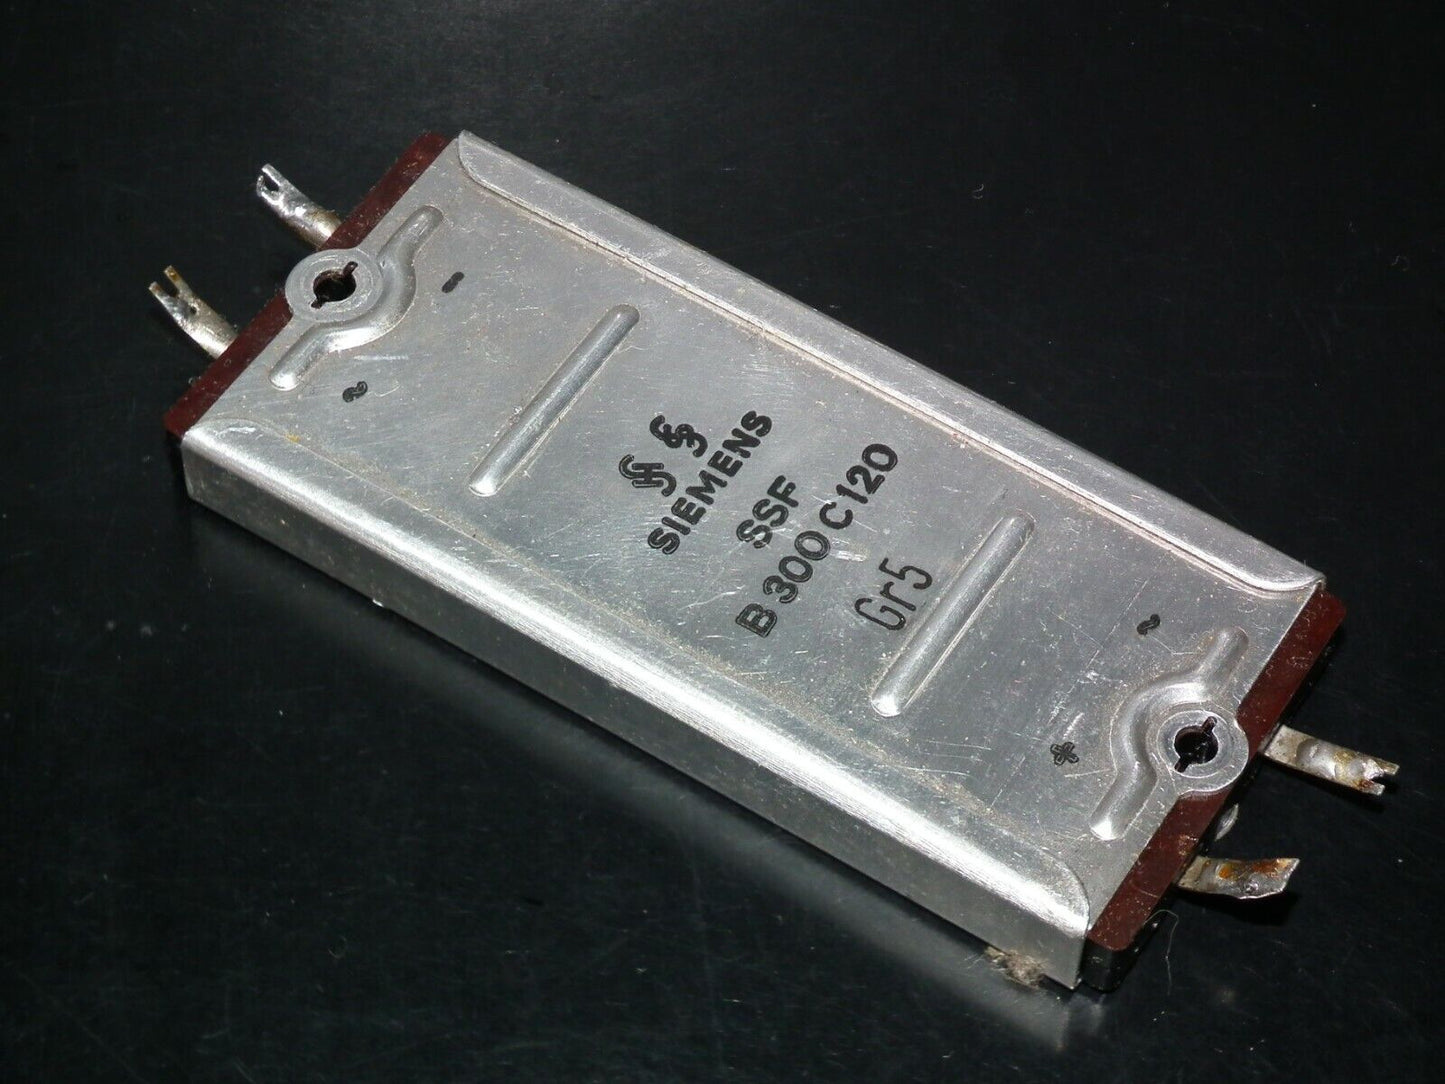 Siemens selenium rectifier B300C120 300V / 120mA Used, tested OK, DIY tube audio